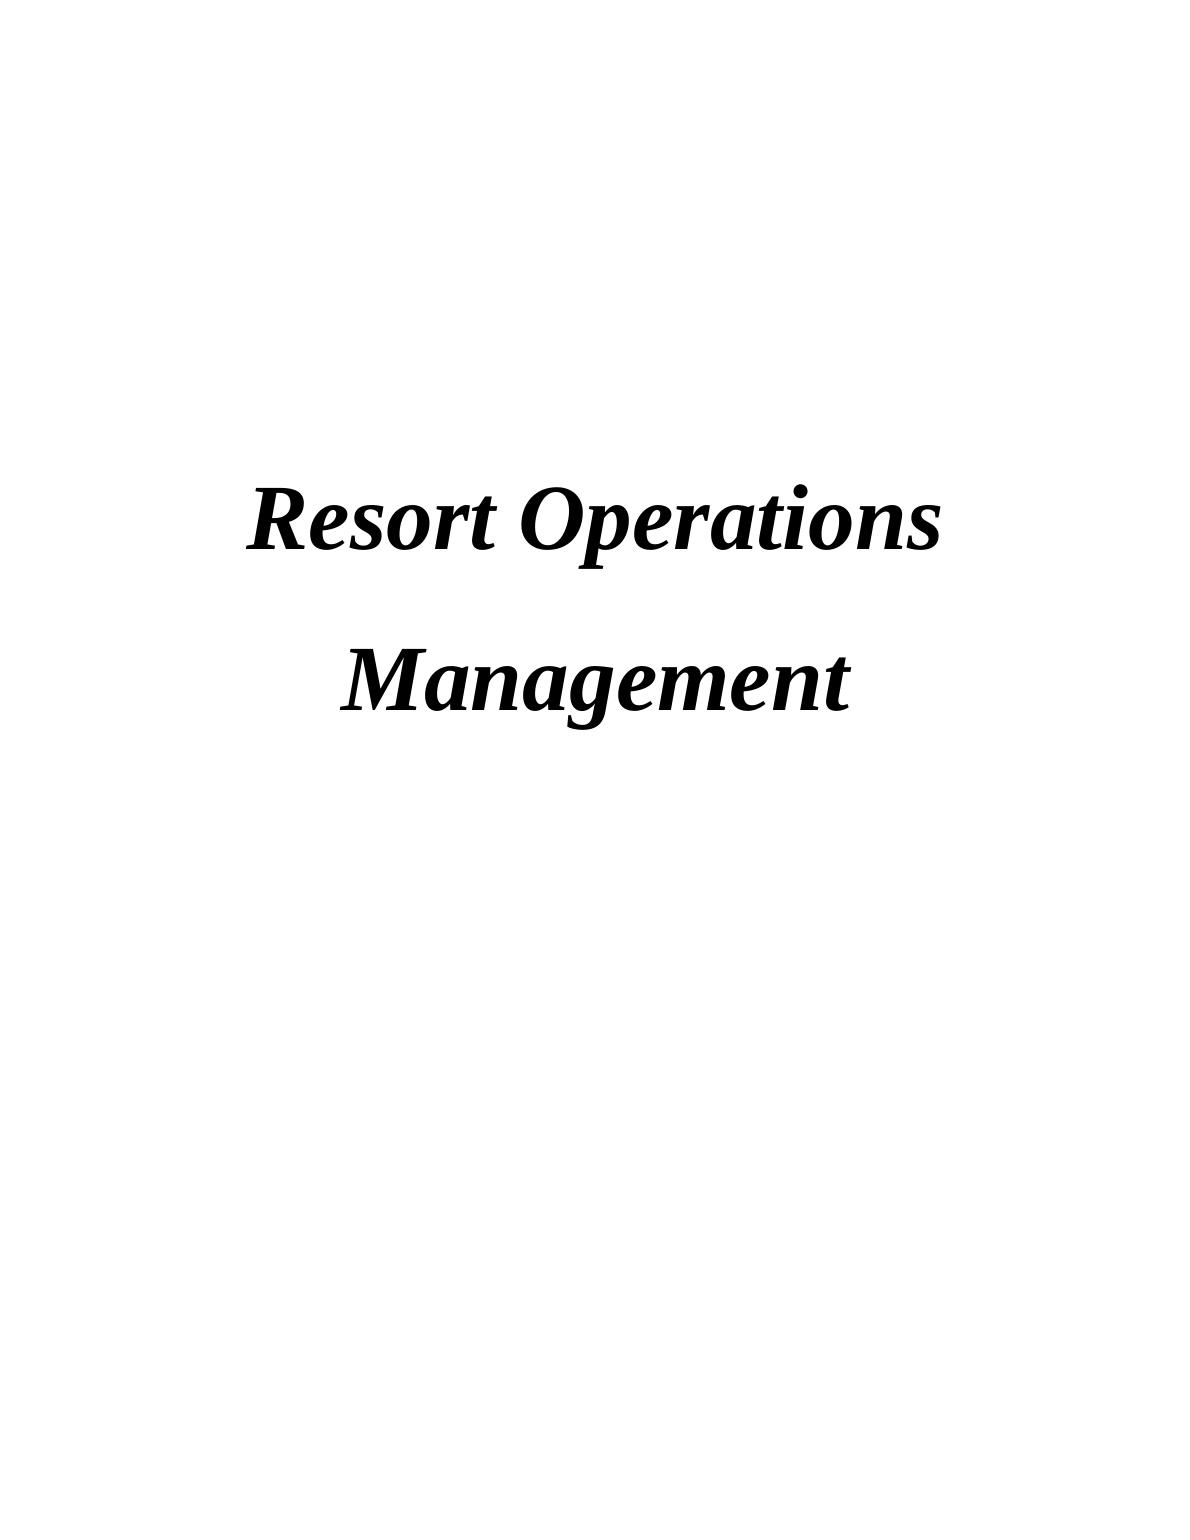 Resort Operations Management Analysis_1